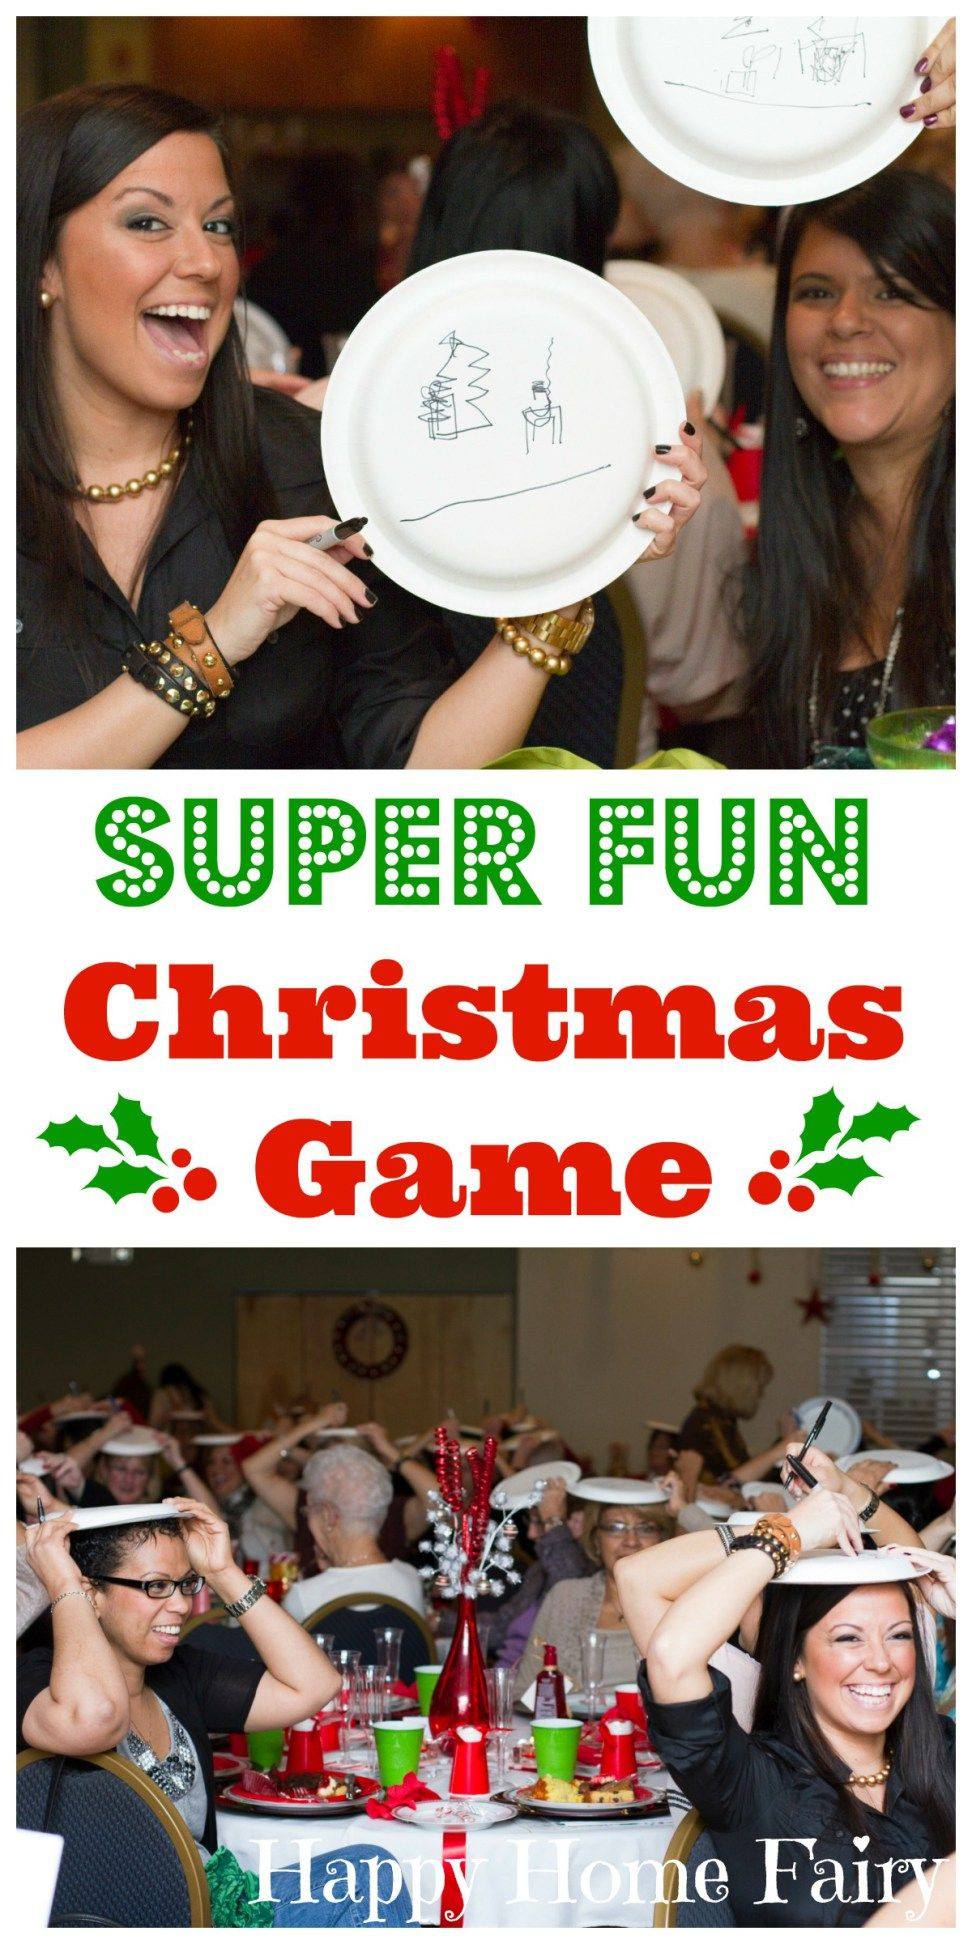 Enjoyable Office Christmas Party Games Ideas
 A SUPER FUN CHRISTMAS GAME